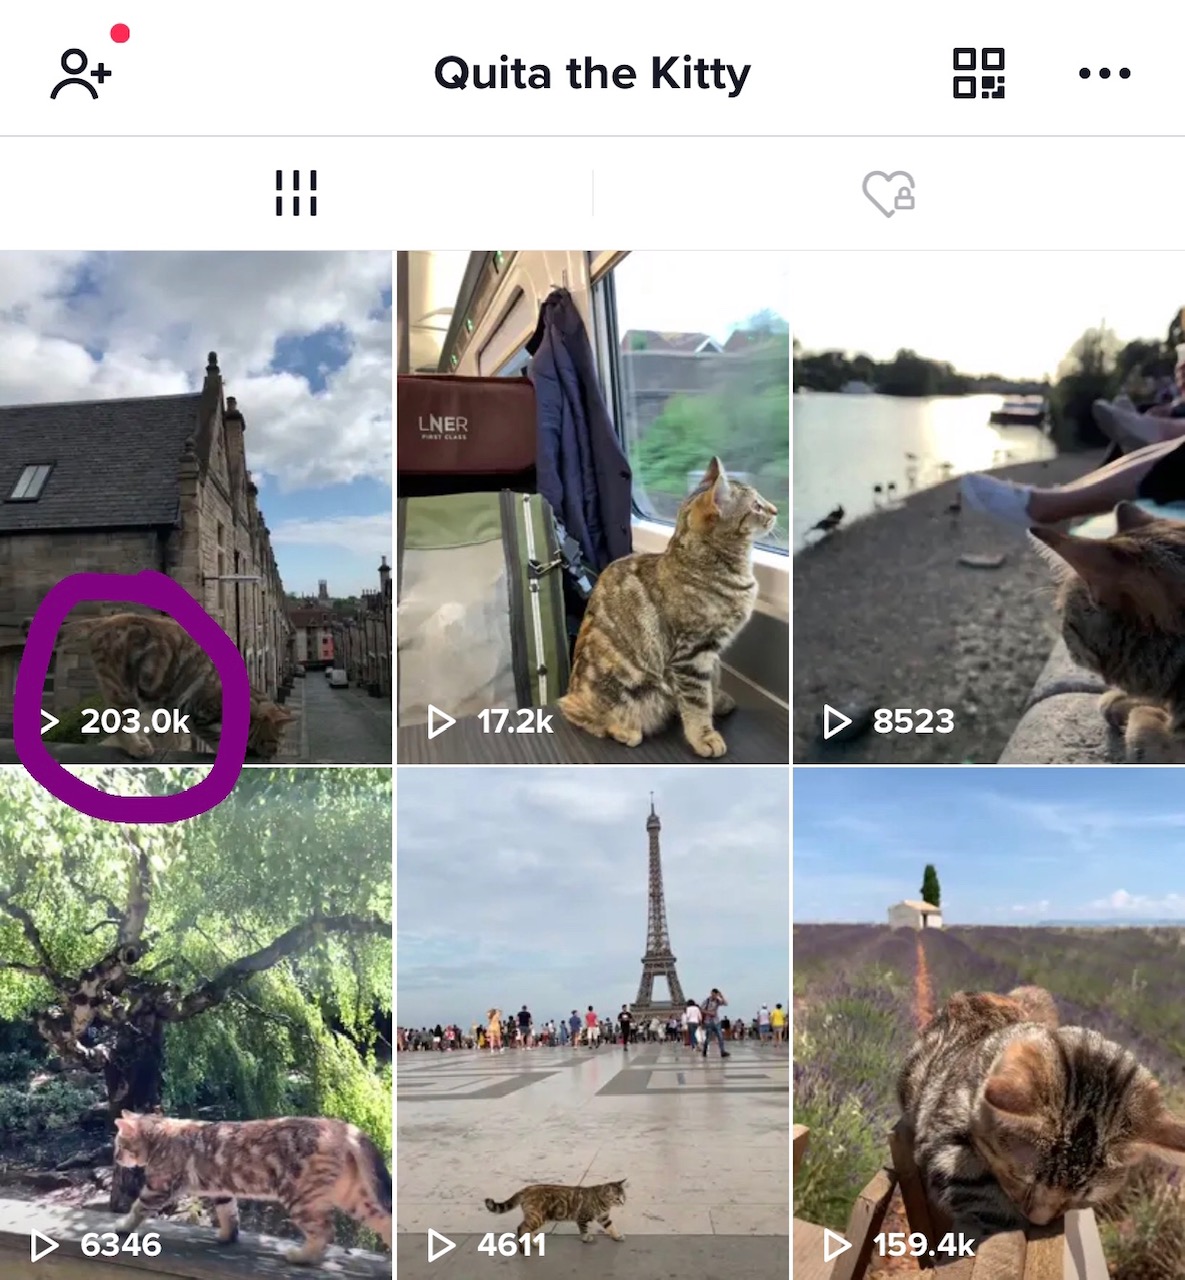 2019-08-01 (Quita the Kitty) TikTok Edinburgh video view count